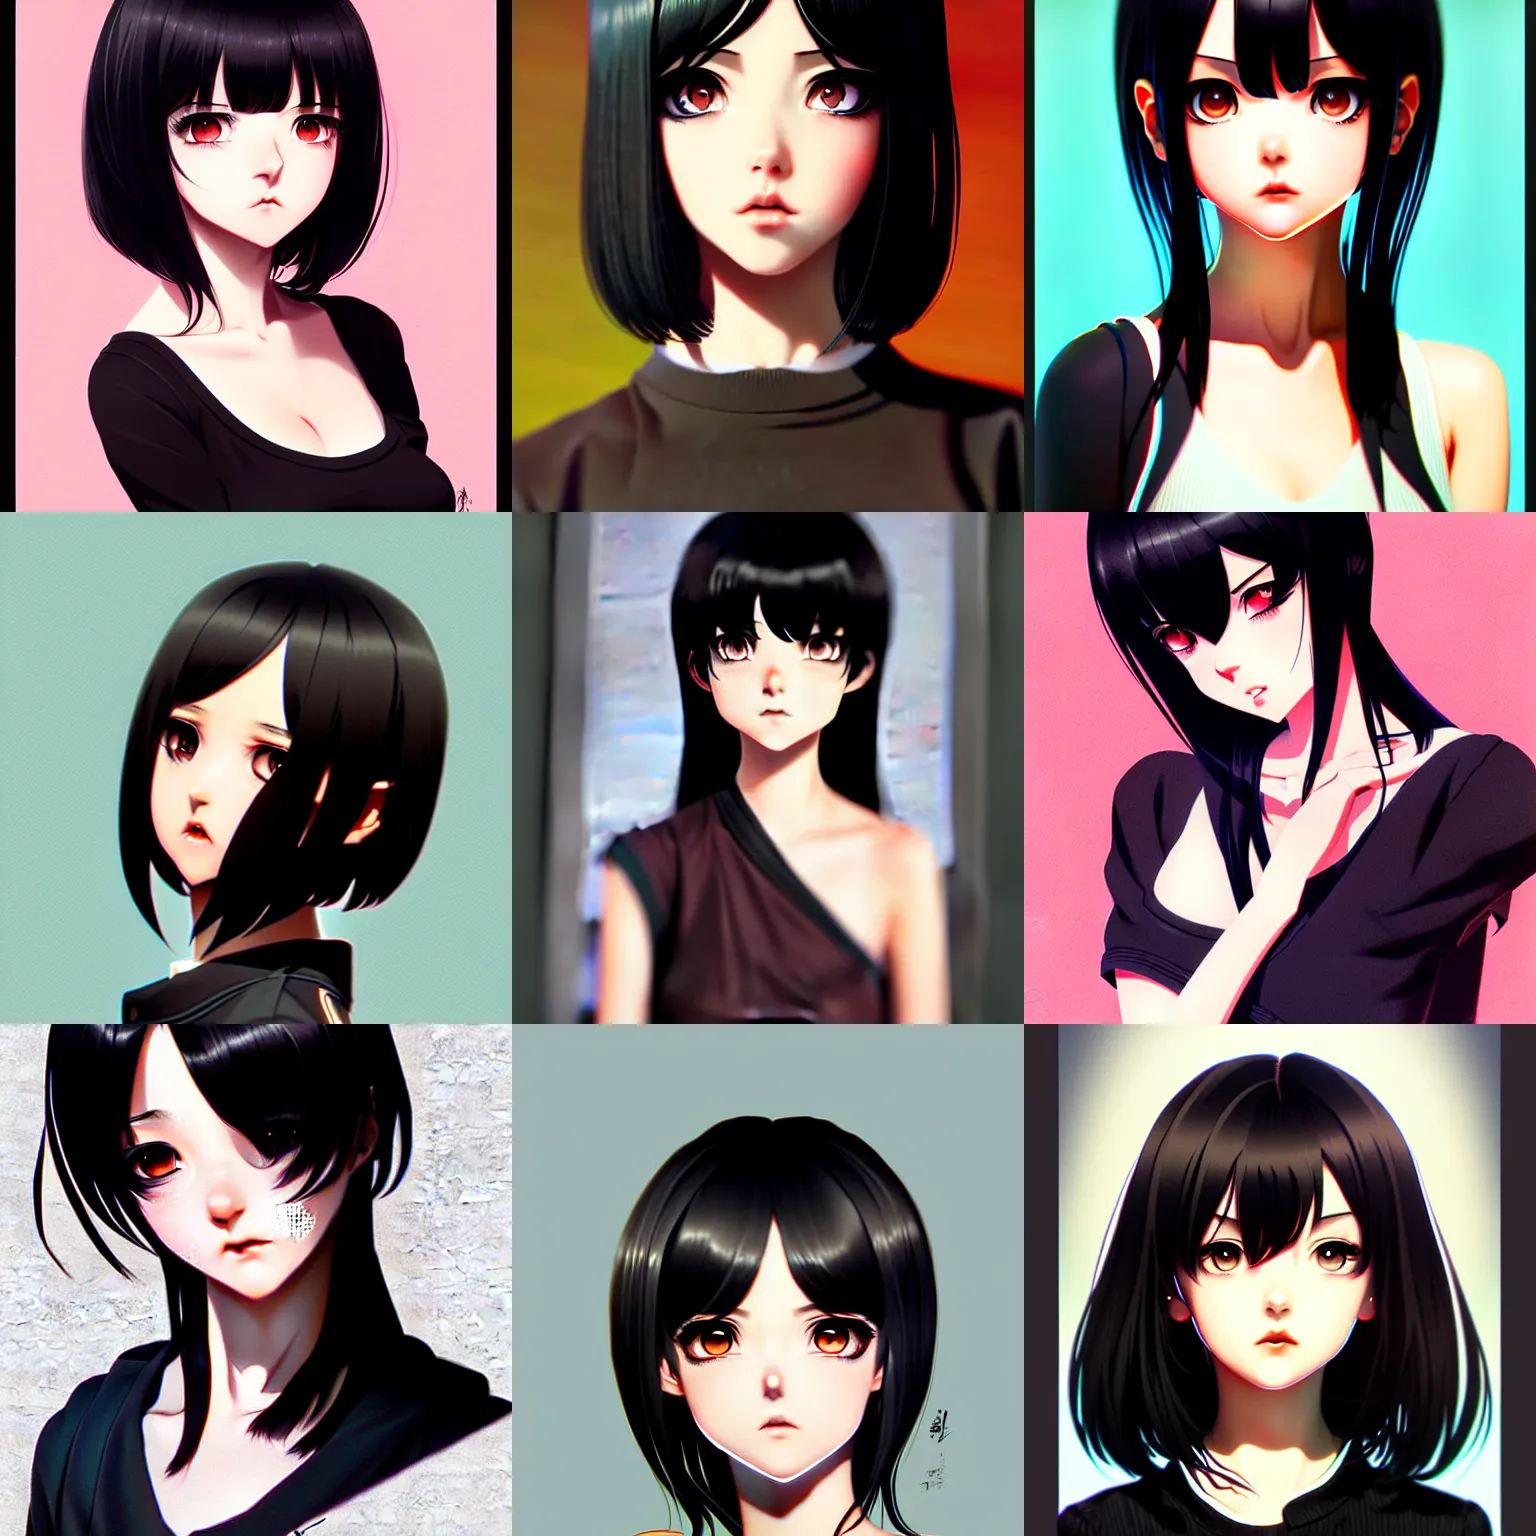 Prompt: black haired cute fiesty female character by ilya kuvshinov, high - key lighting, detailed anime style illustration